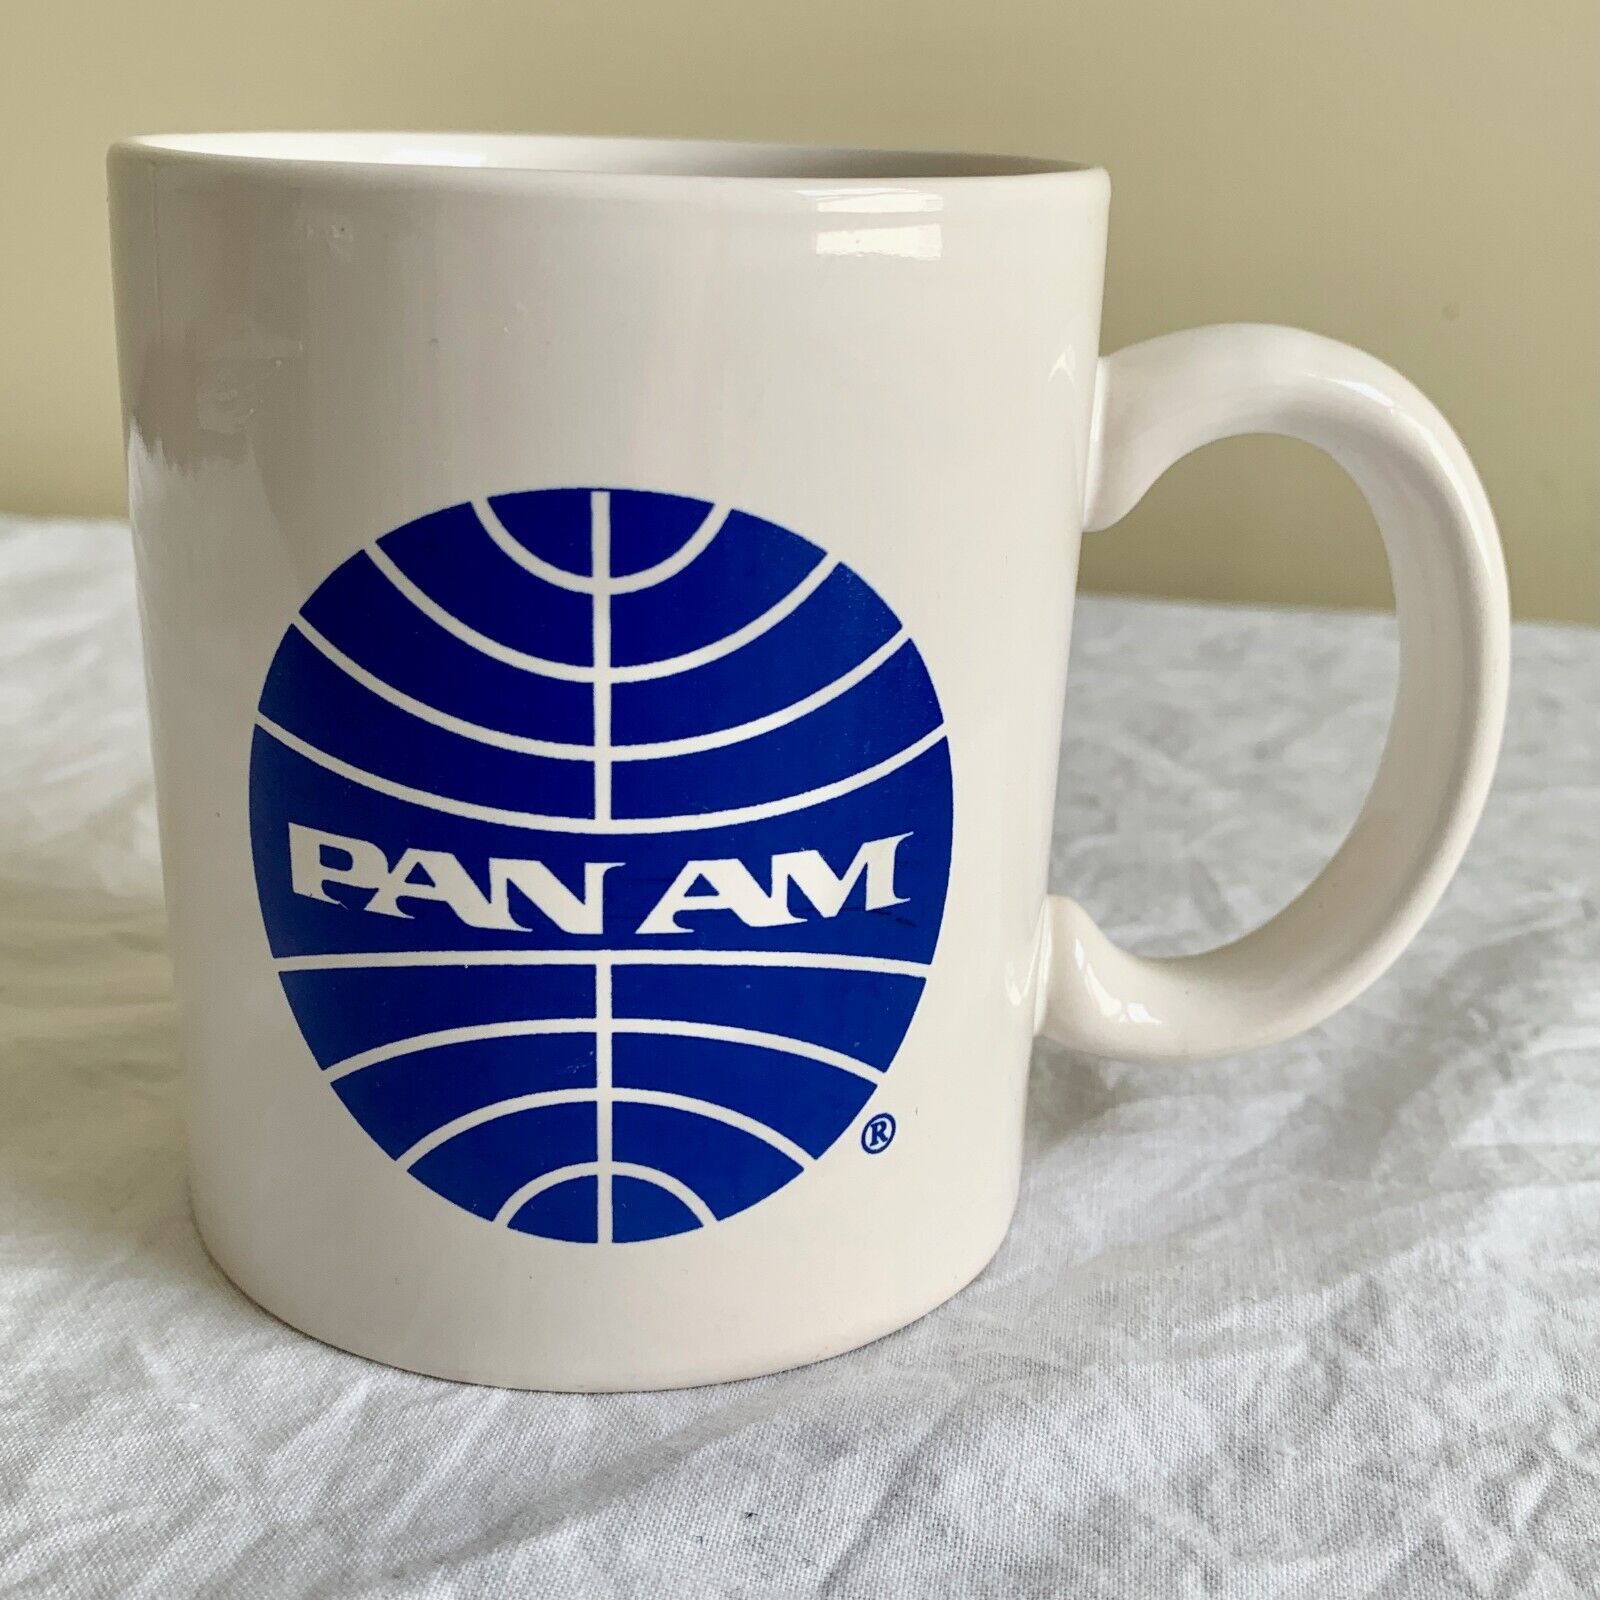 Pan Am Airlines Mug M Ware - Excellent - Estate Find